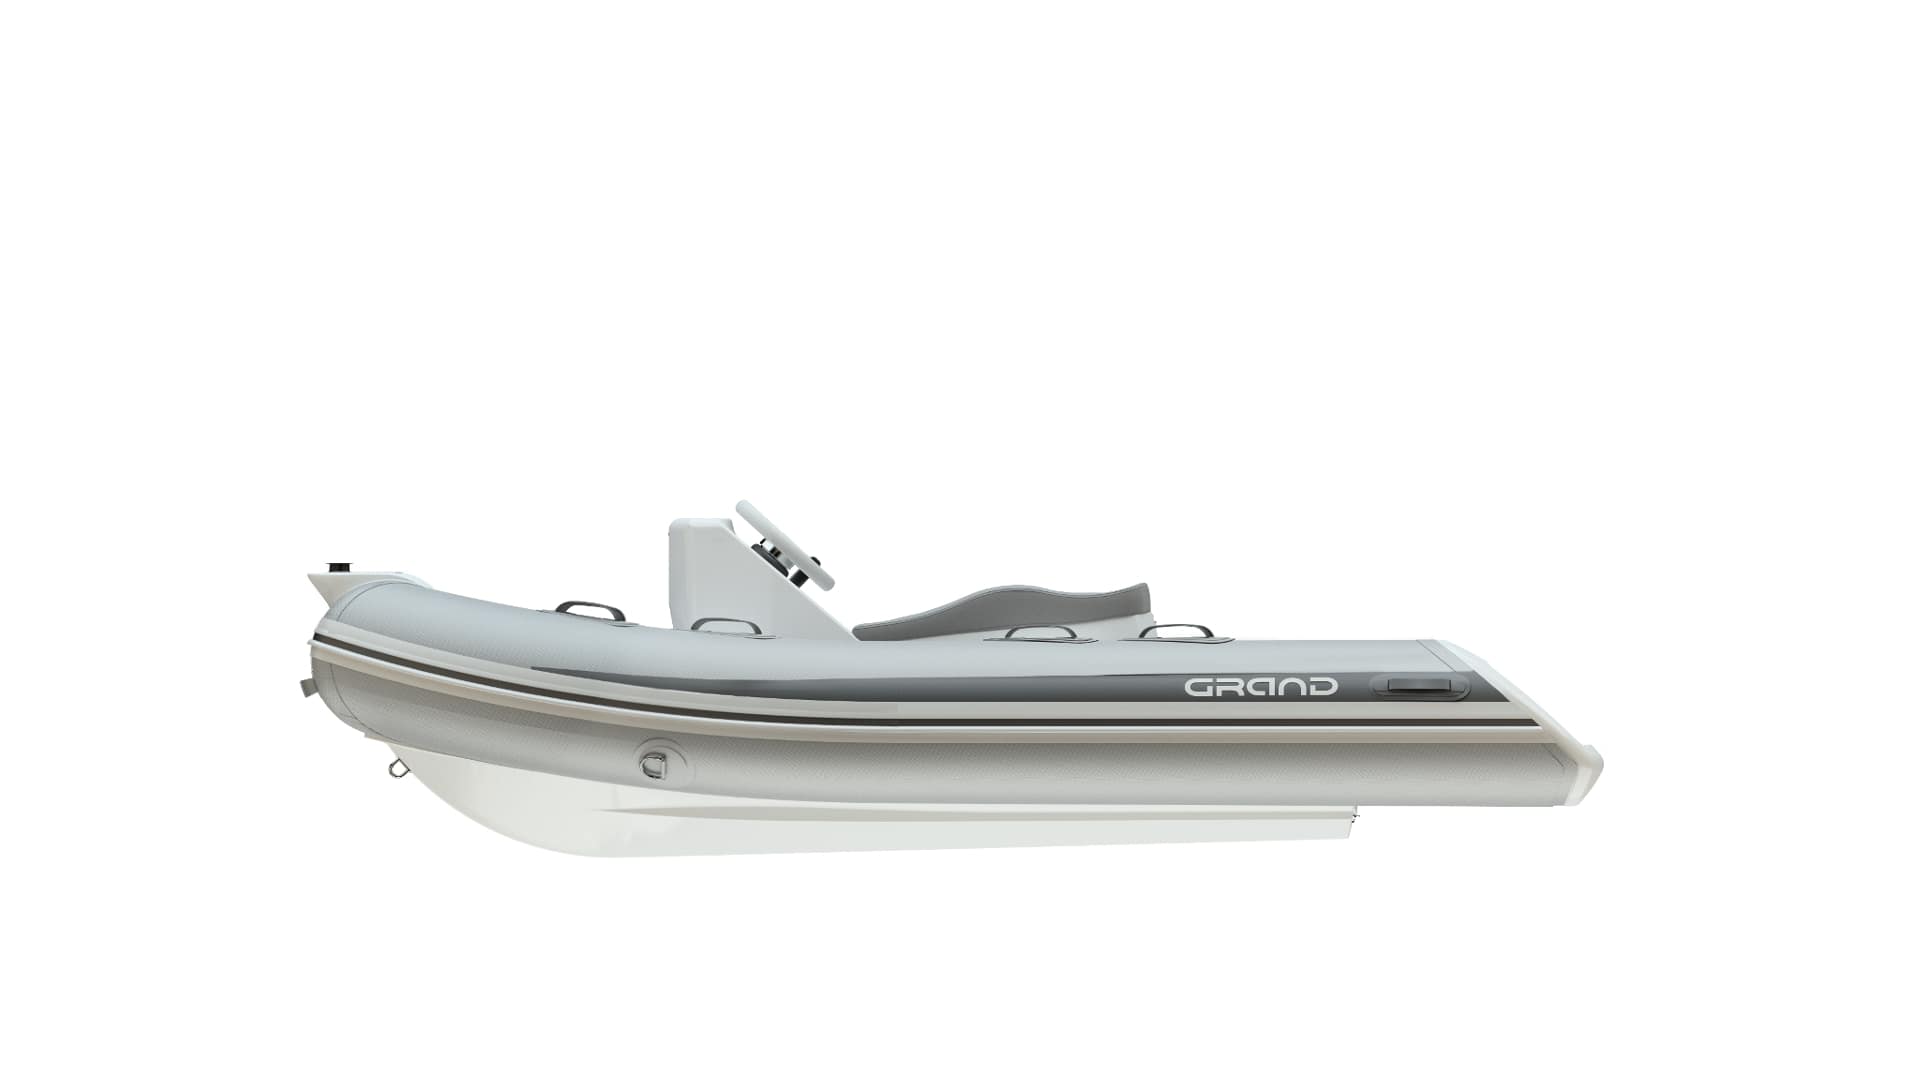 Надувная лодка с жестким дном GRAND Silver Line S300S, Надувная лодка GRAND Silver Line S300S, GRAND Silver Line S300SF, GRAND Silver Line S300S, GRAND S300SF, GRAND S300S, GRAND S300, Надувная лодка GRAND, Надувная лодка ГРАНД, Надувная лодка с жестким дном, RIB, Rigid Inflatable Boats